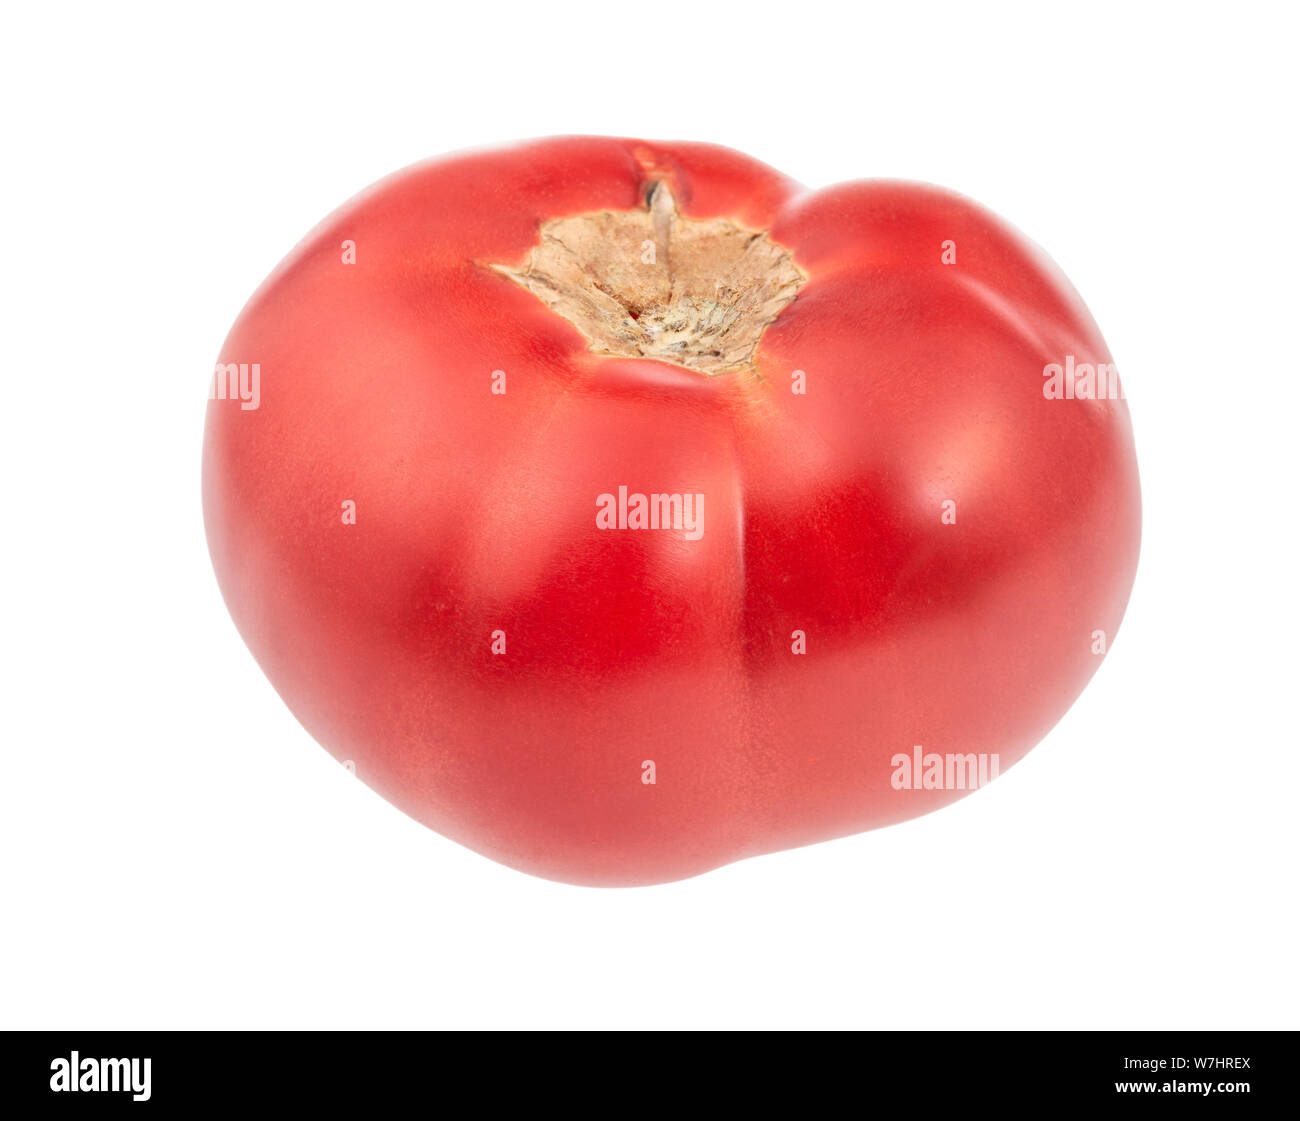 fresh large red bulls heart tomato isolated on white background Stock Photo